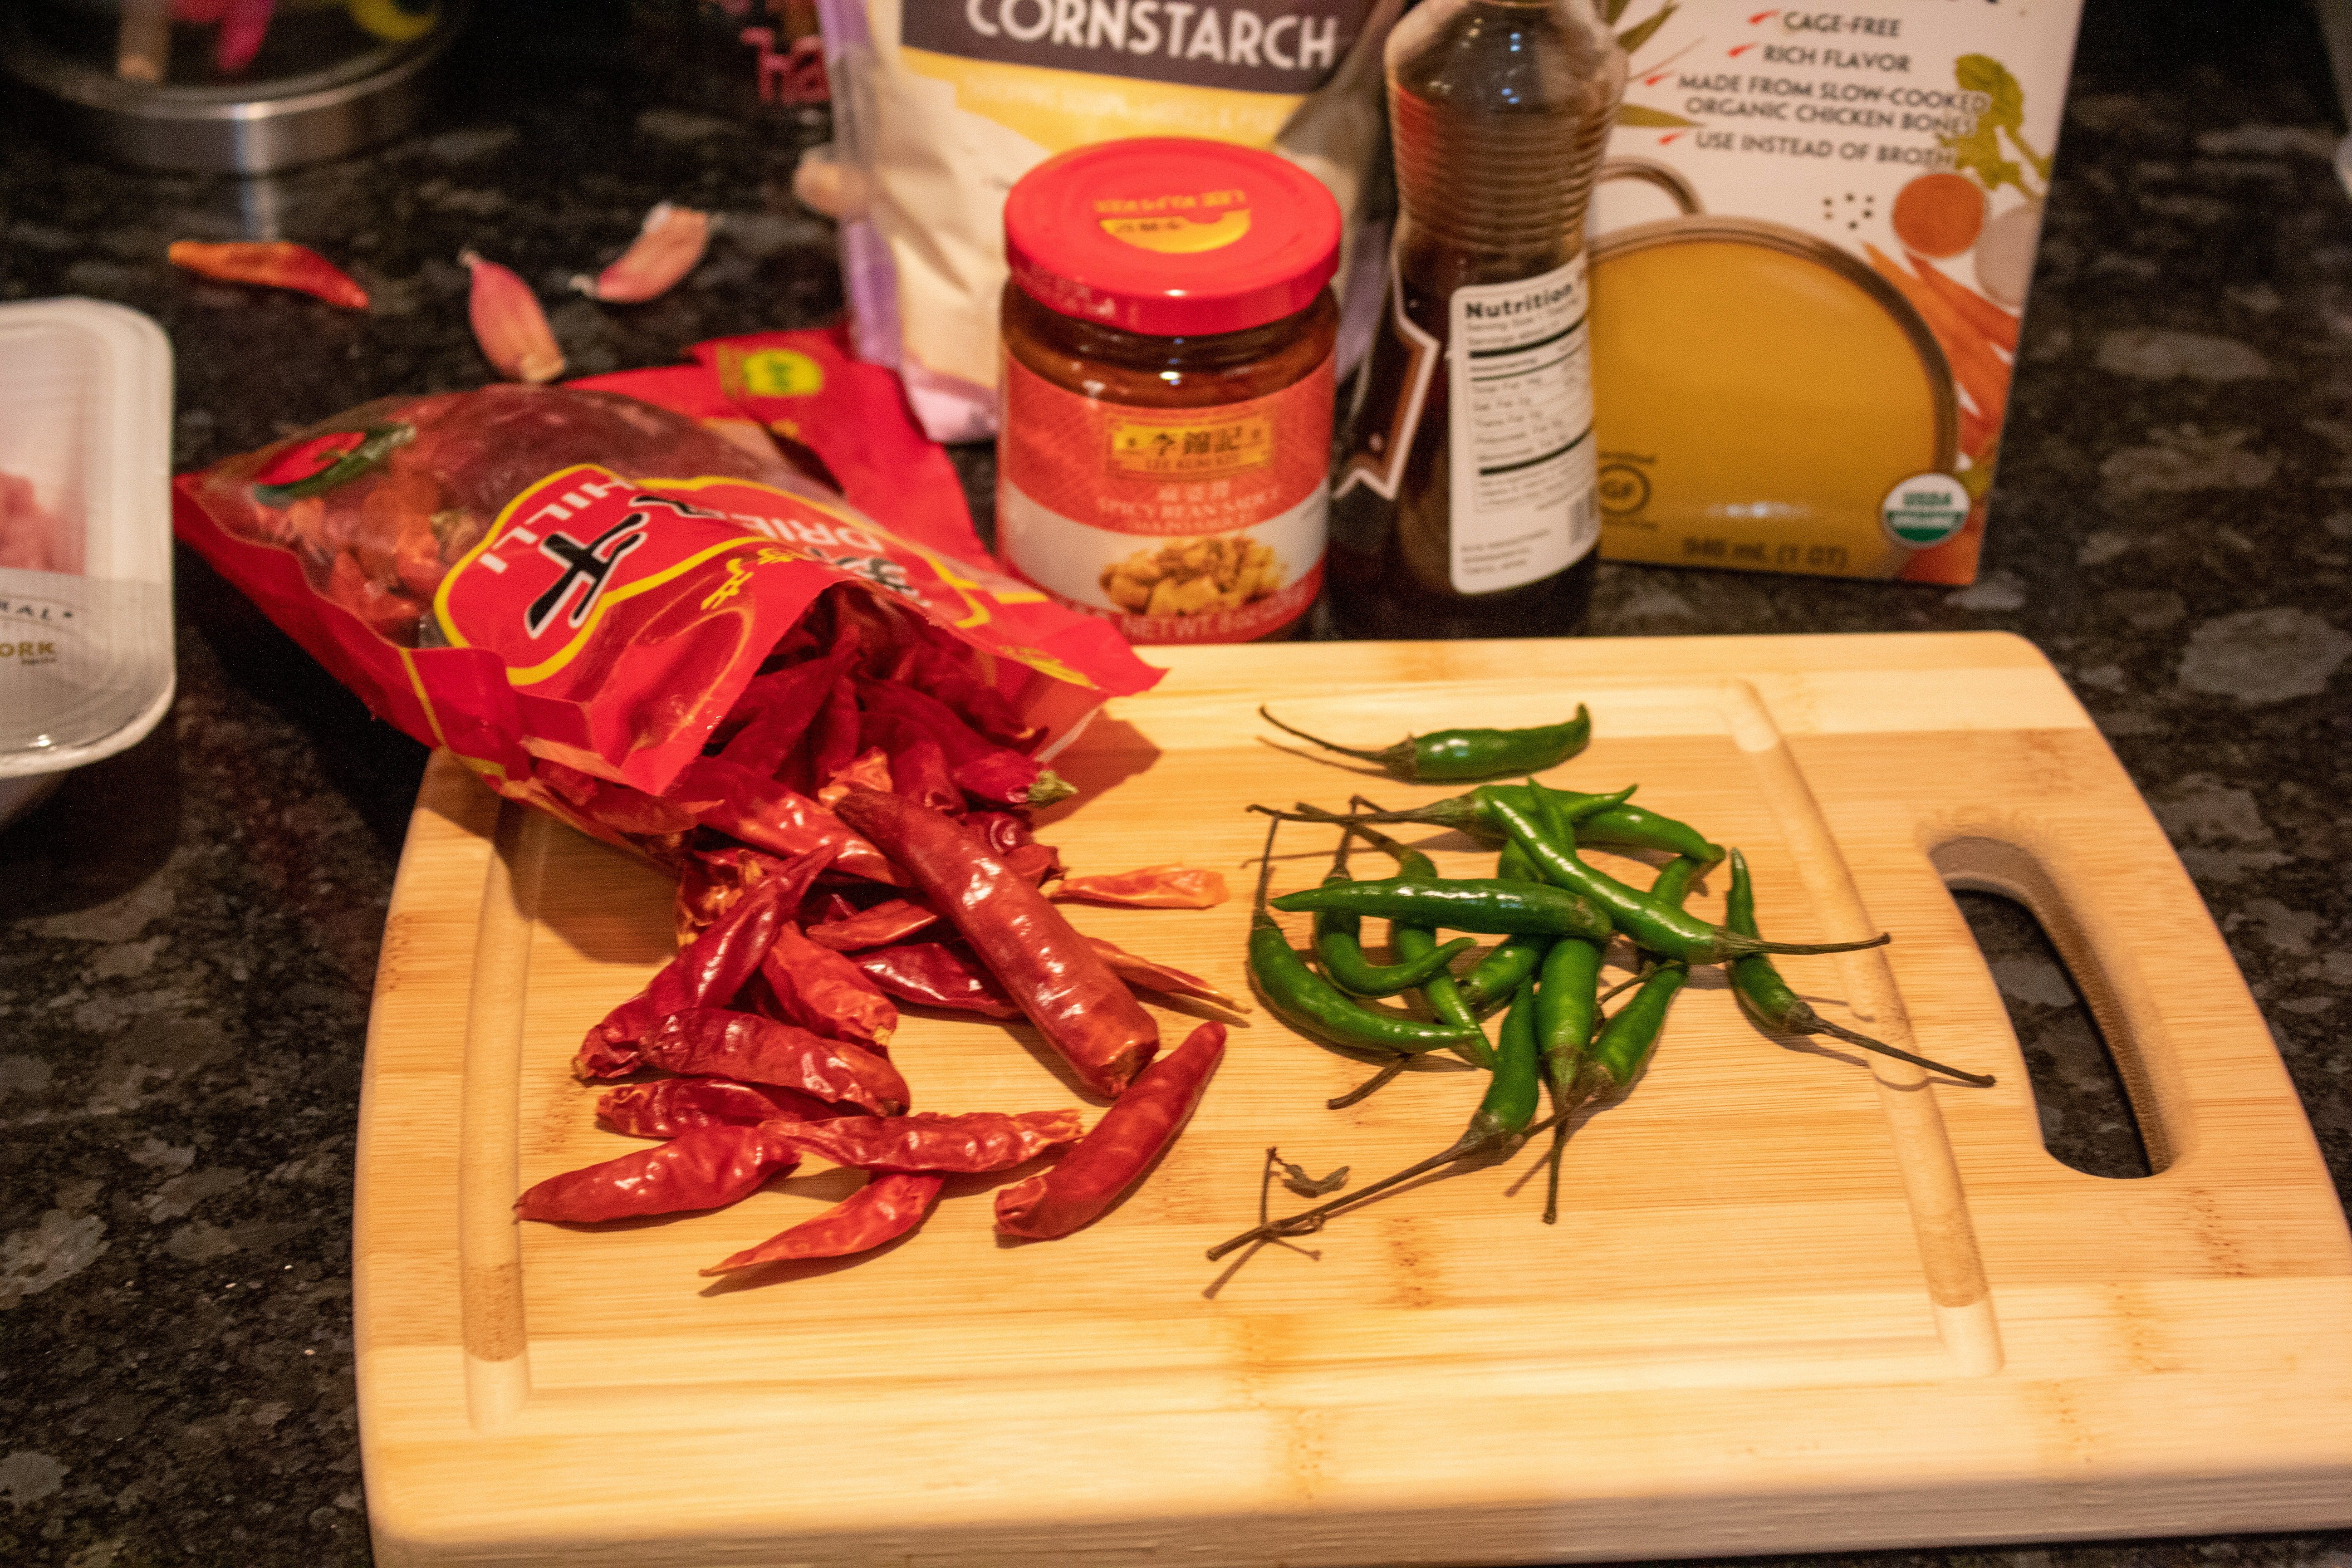 Chili peppers for Mapo Tofu @ tipsychocochip,com